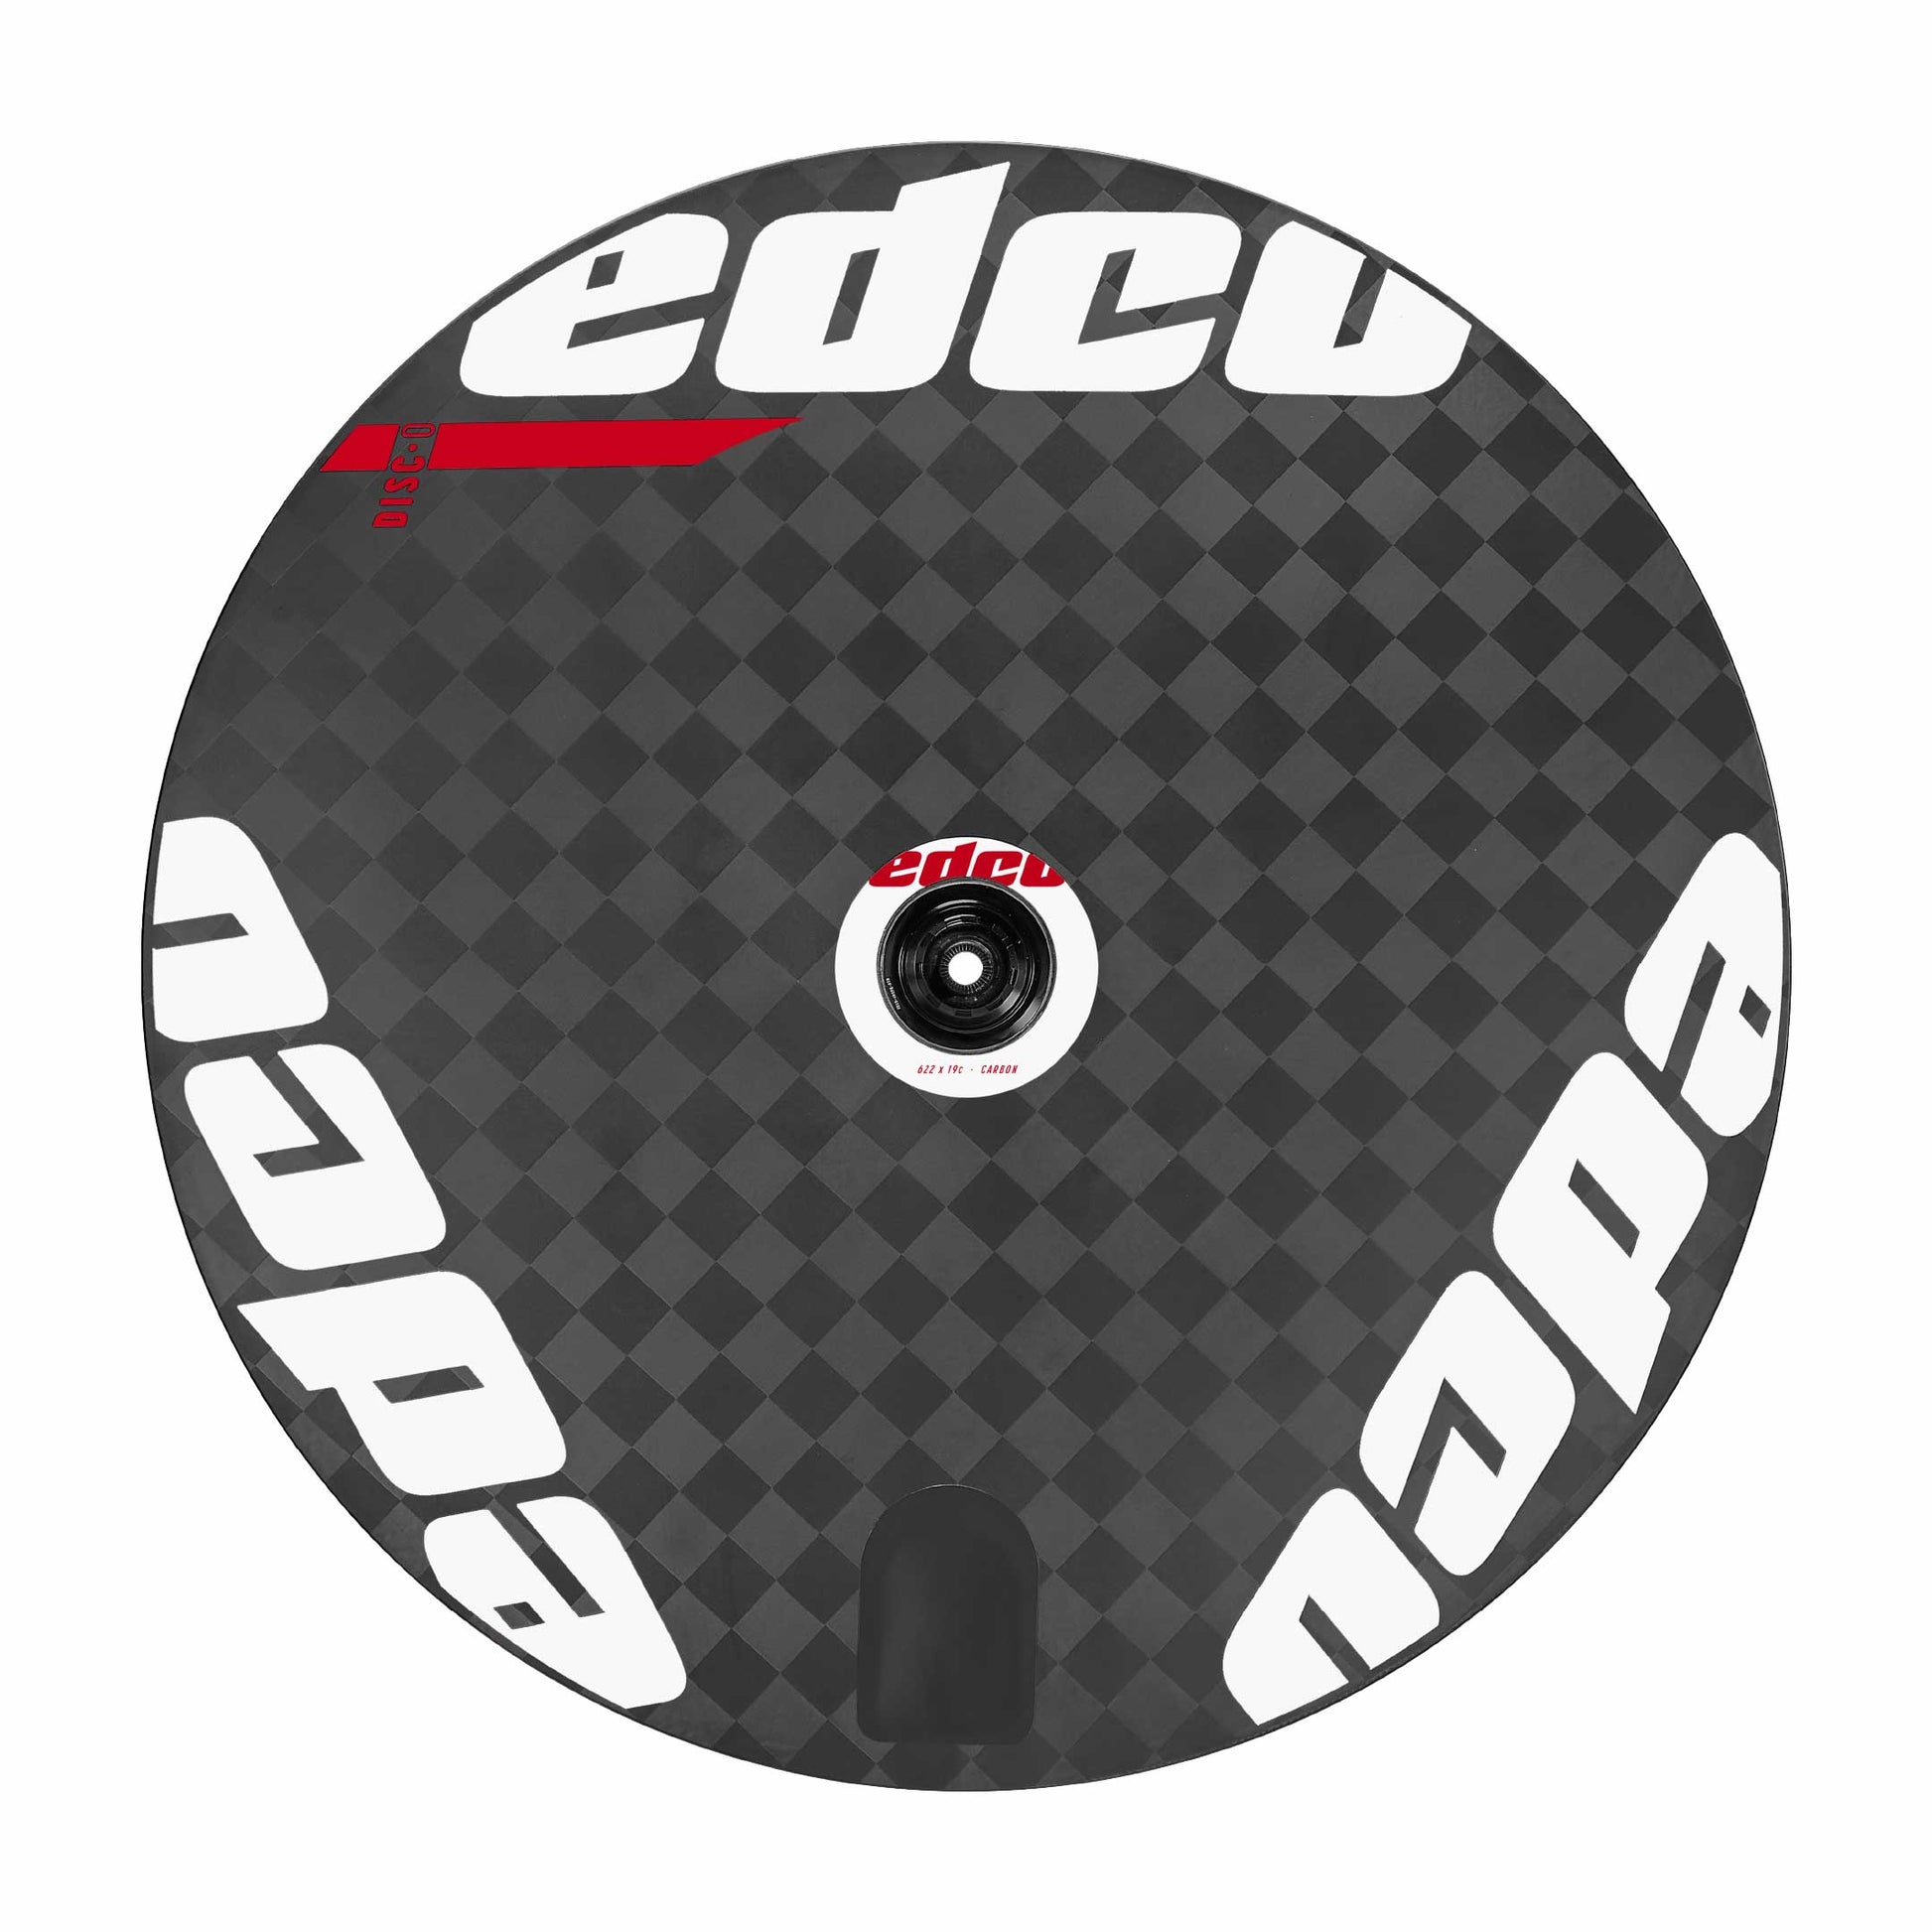 Full disc rear wheel, disc brake, triathlon or timetrail wheel, with red white logos